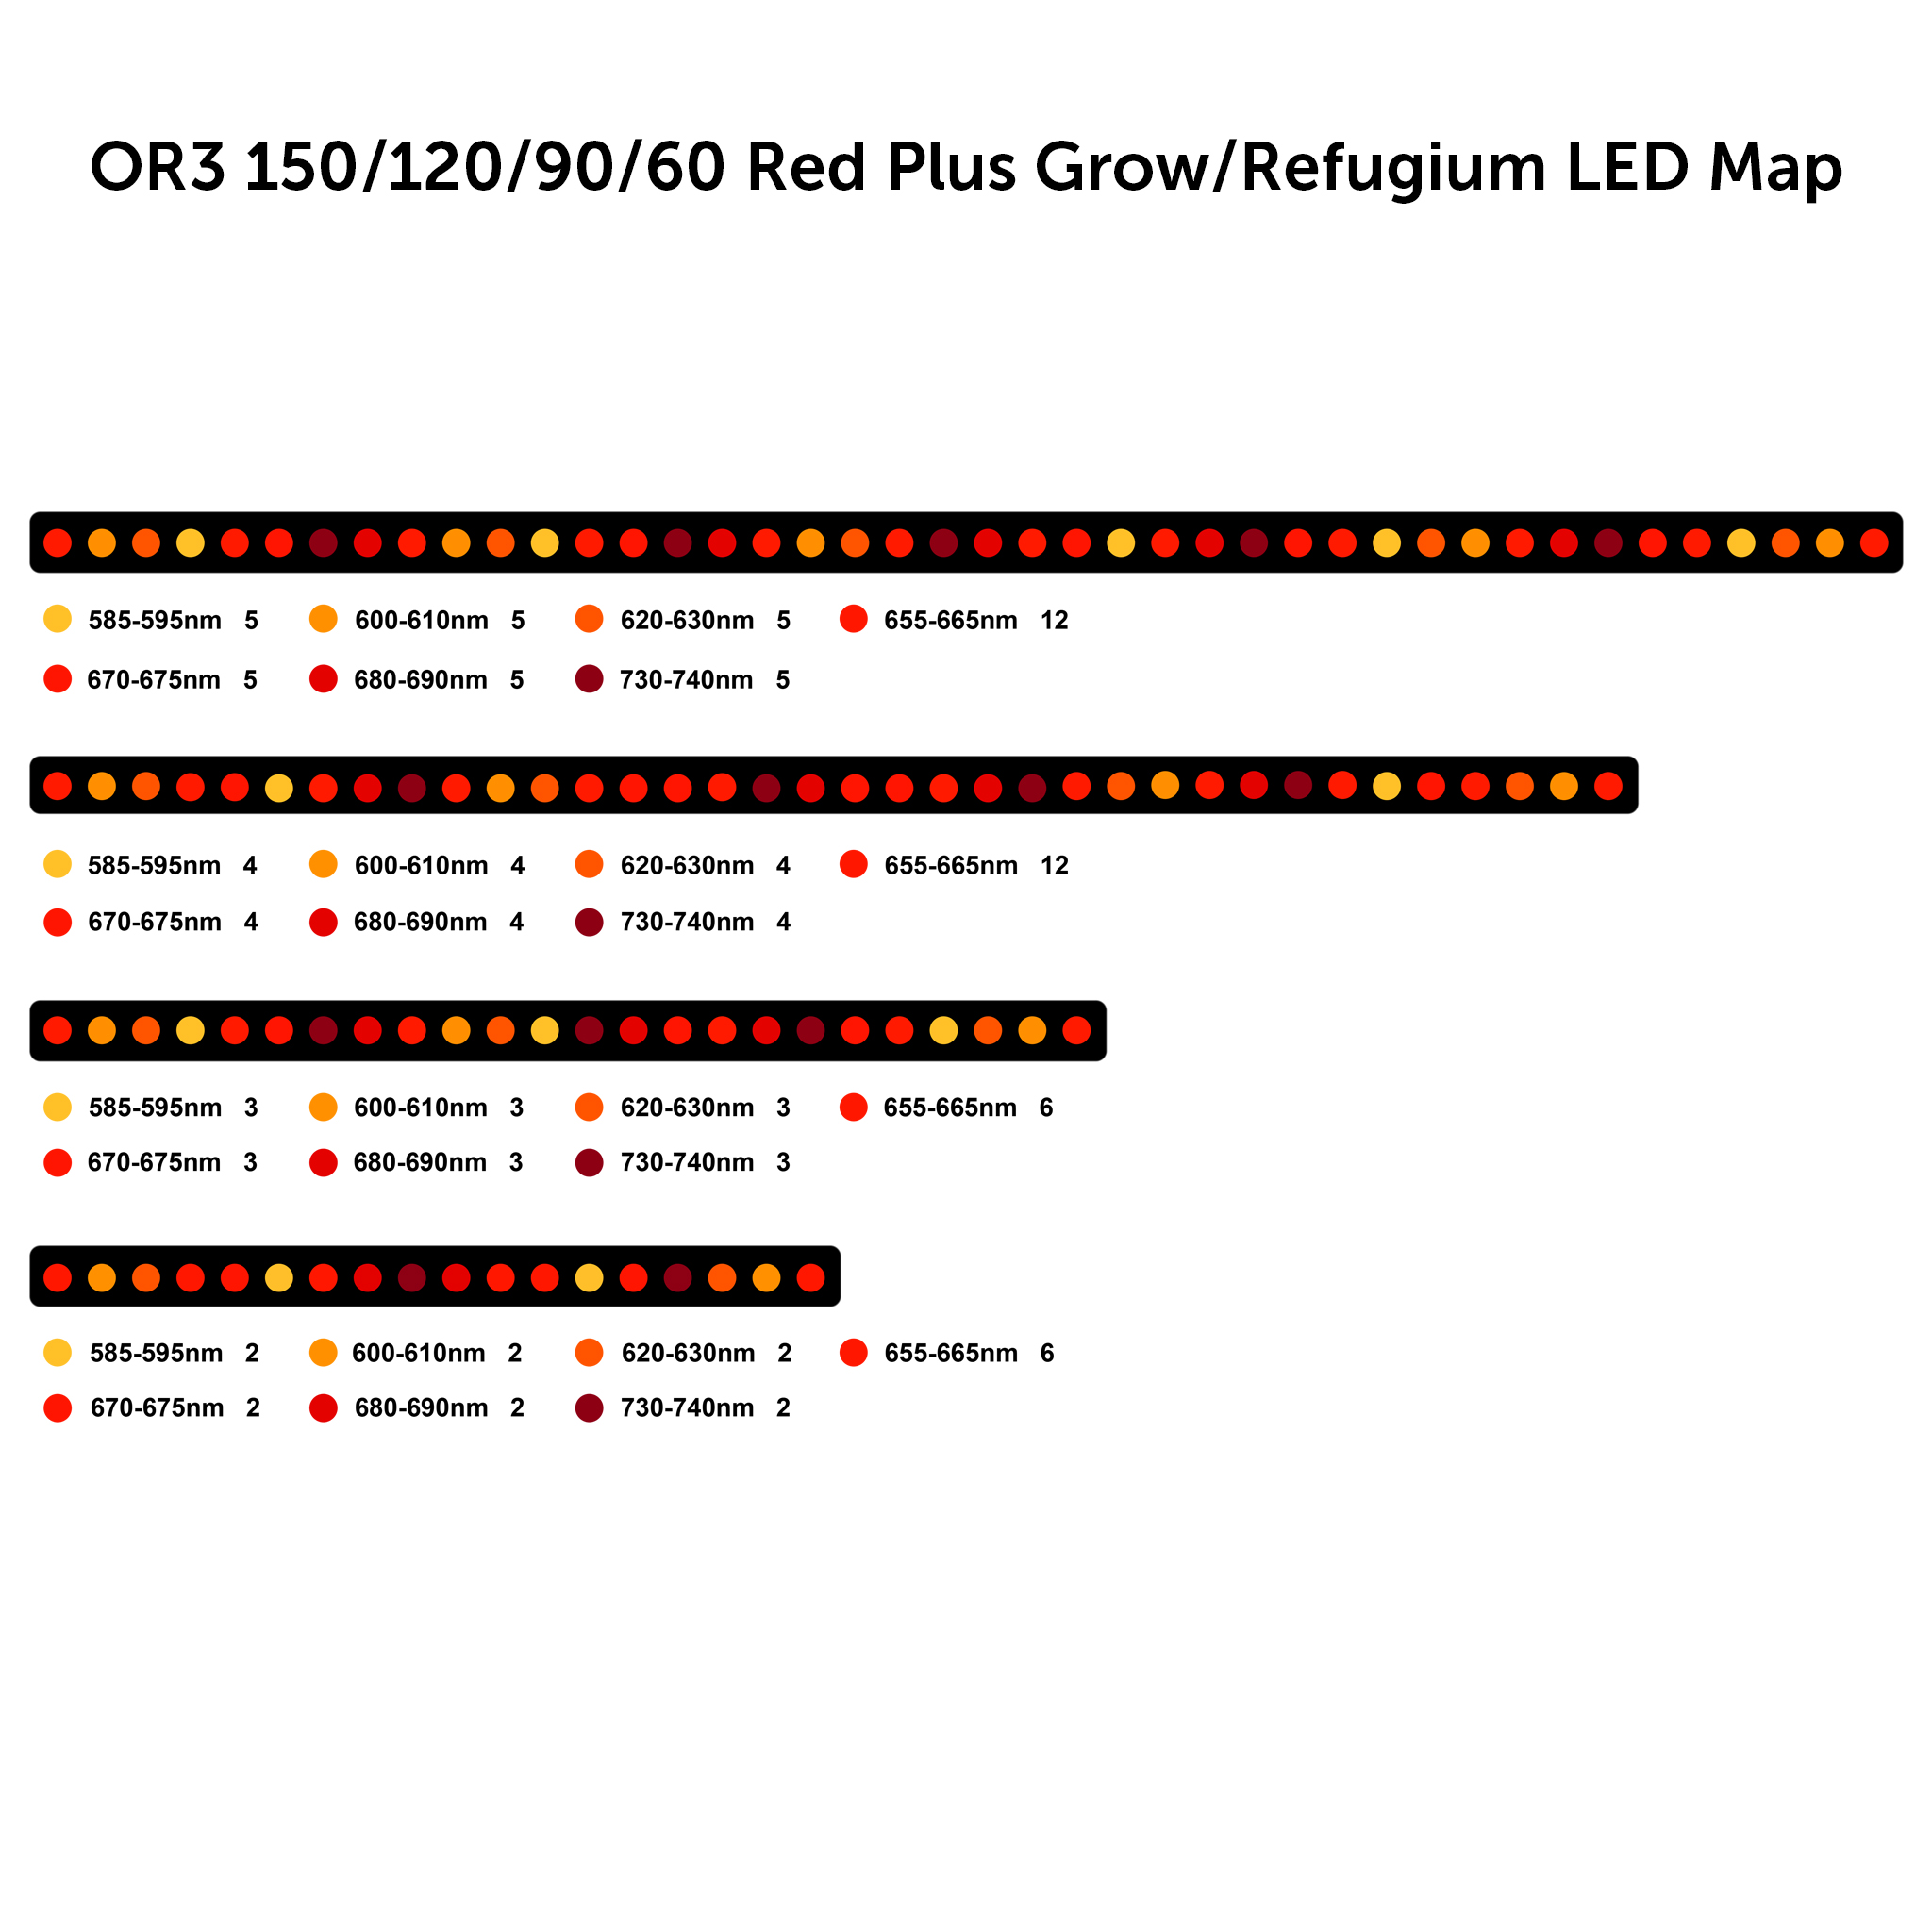 or3-red-plus-grow-refugium-led-지도